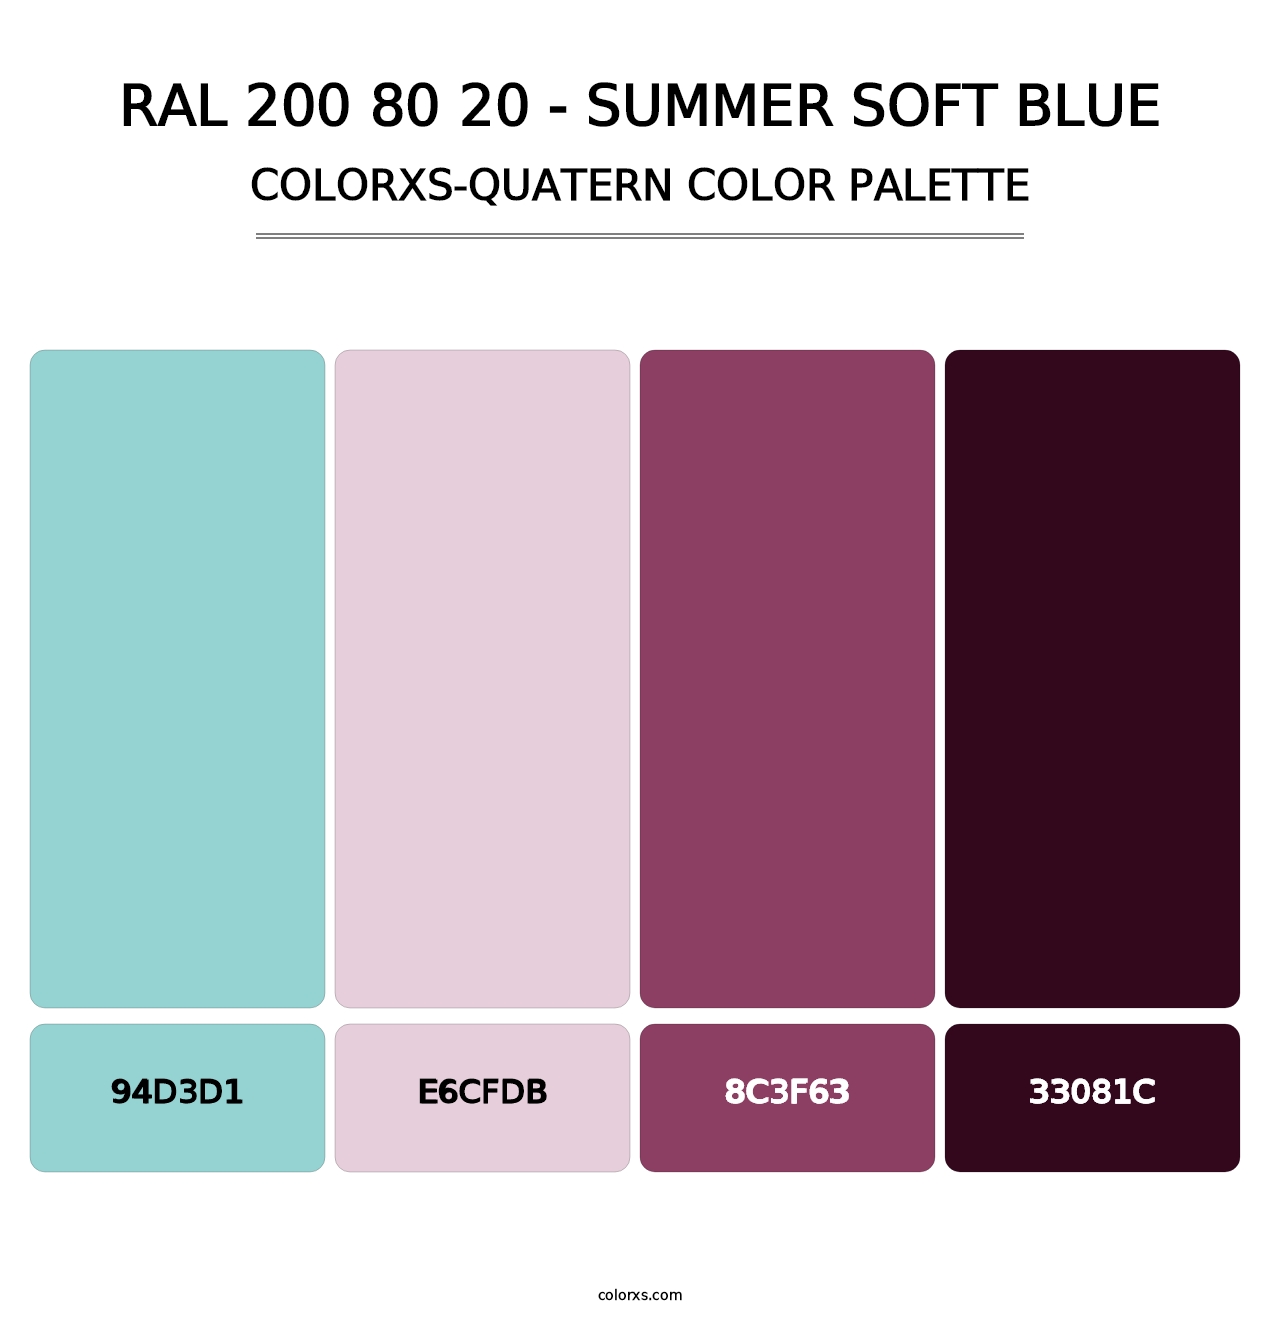 RAL 200 80 20 - Summer Soft Blue - Colorxs Quatern Palette